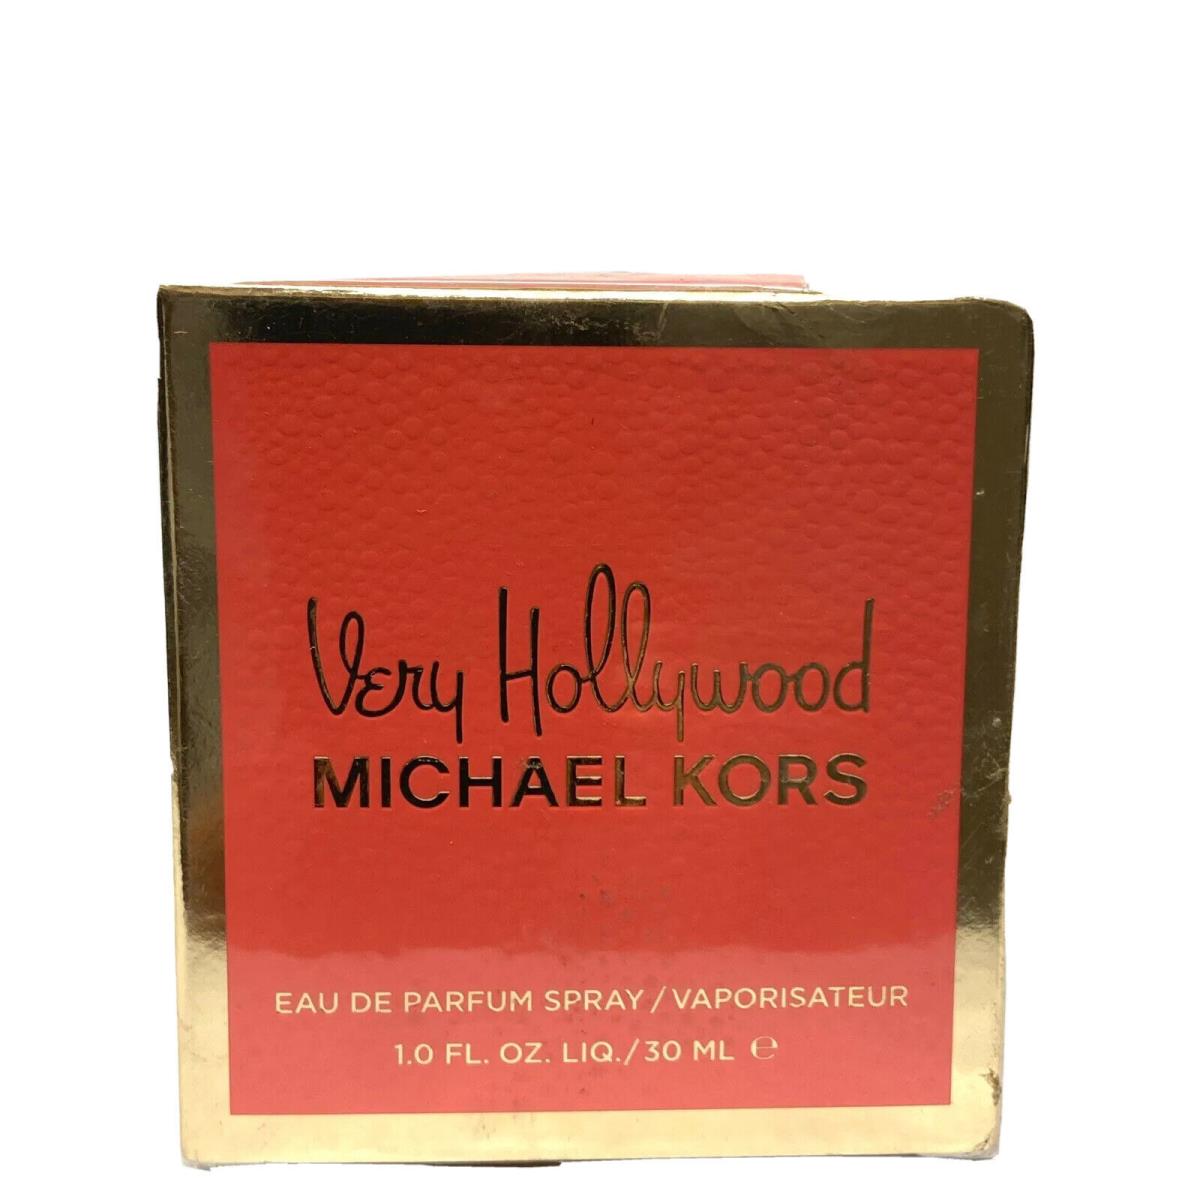 Very Hollywood Eau de Parfum 1oz Spray Michael Kors